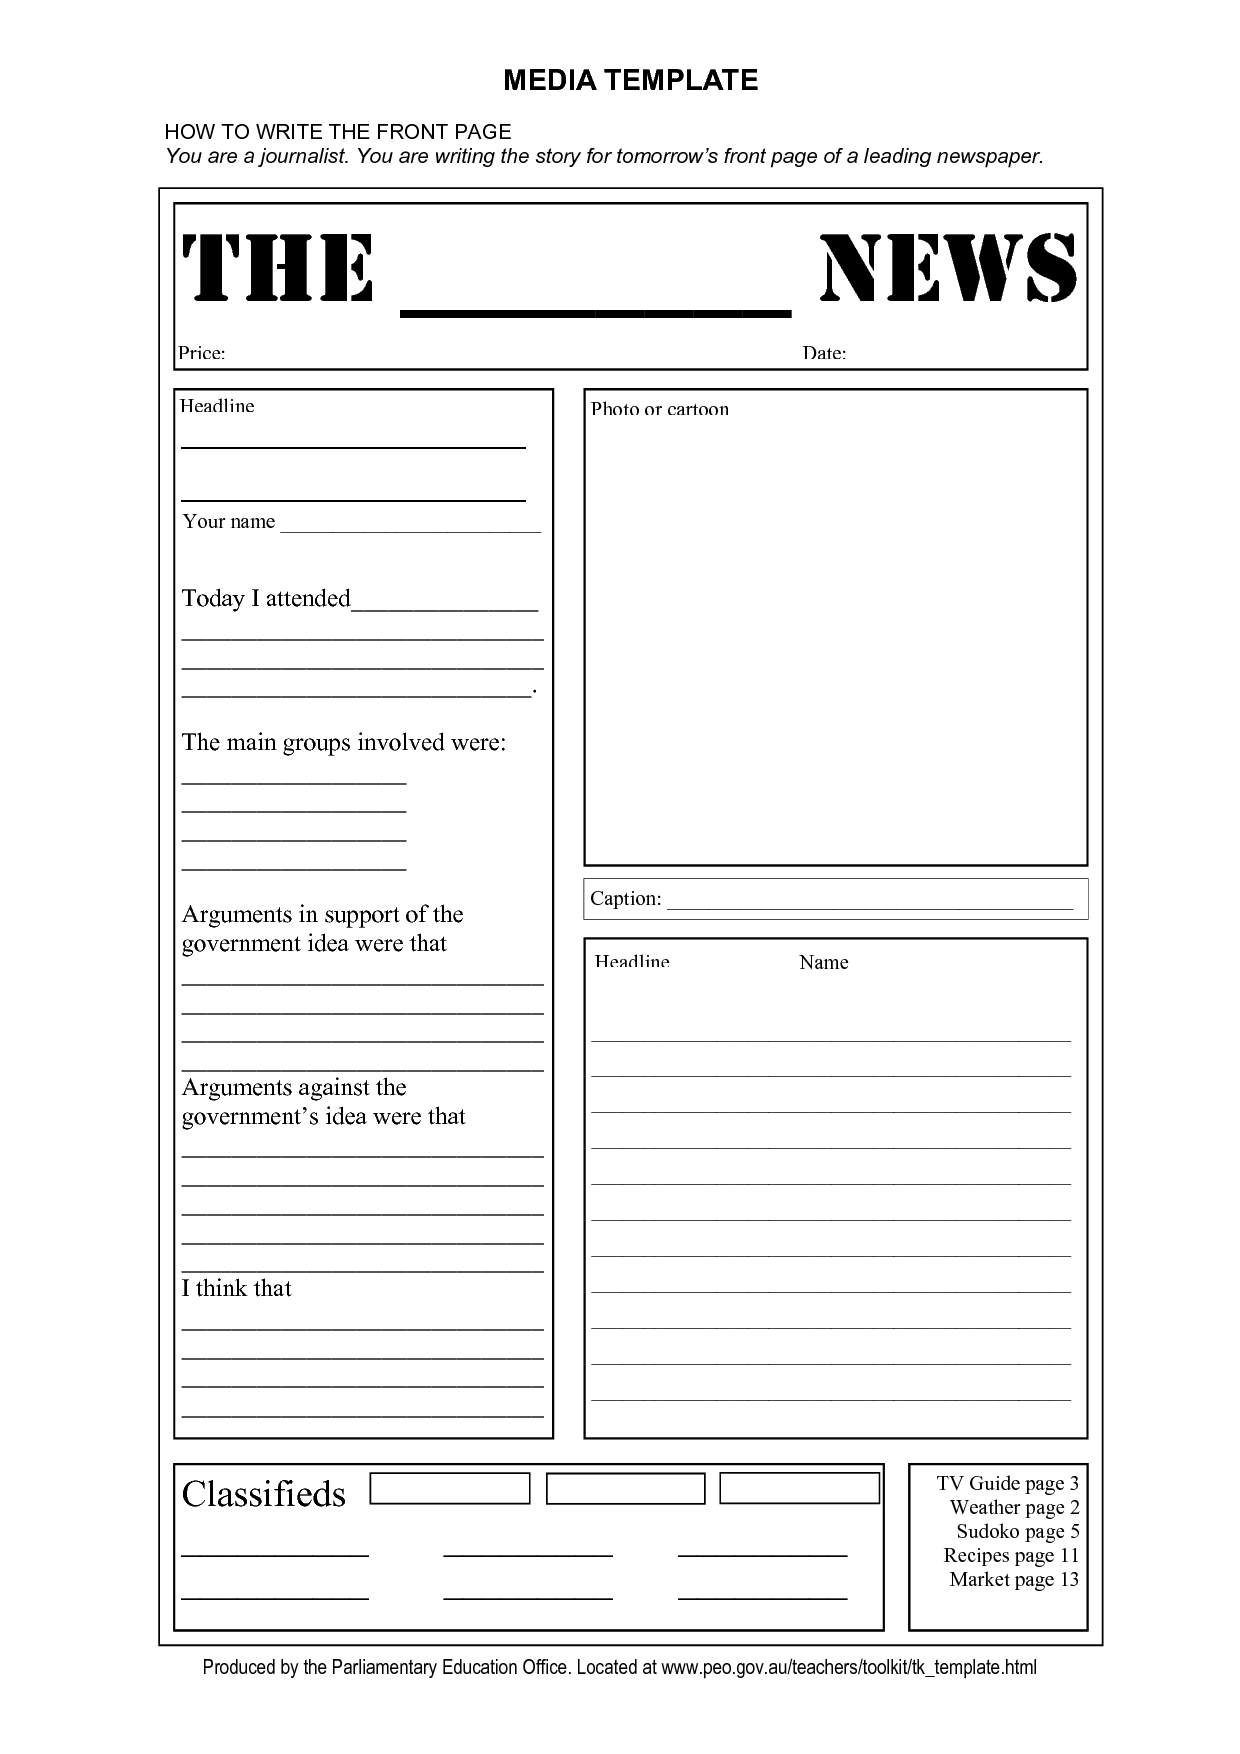 Blank Newspaper Template | E Commercewordpress With Regard To Blank Newspaper Template For Word